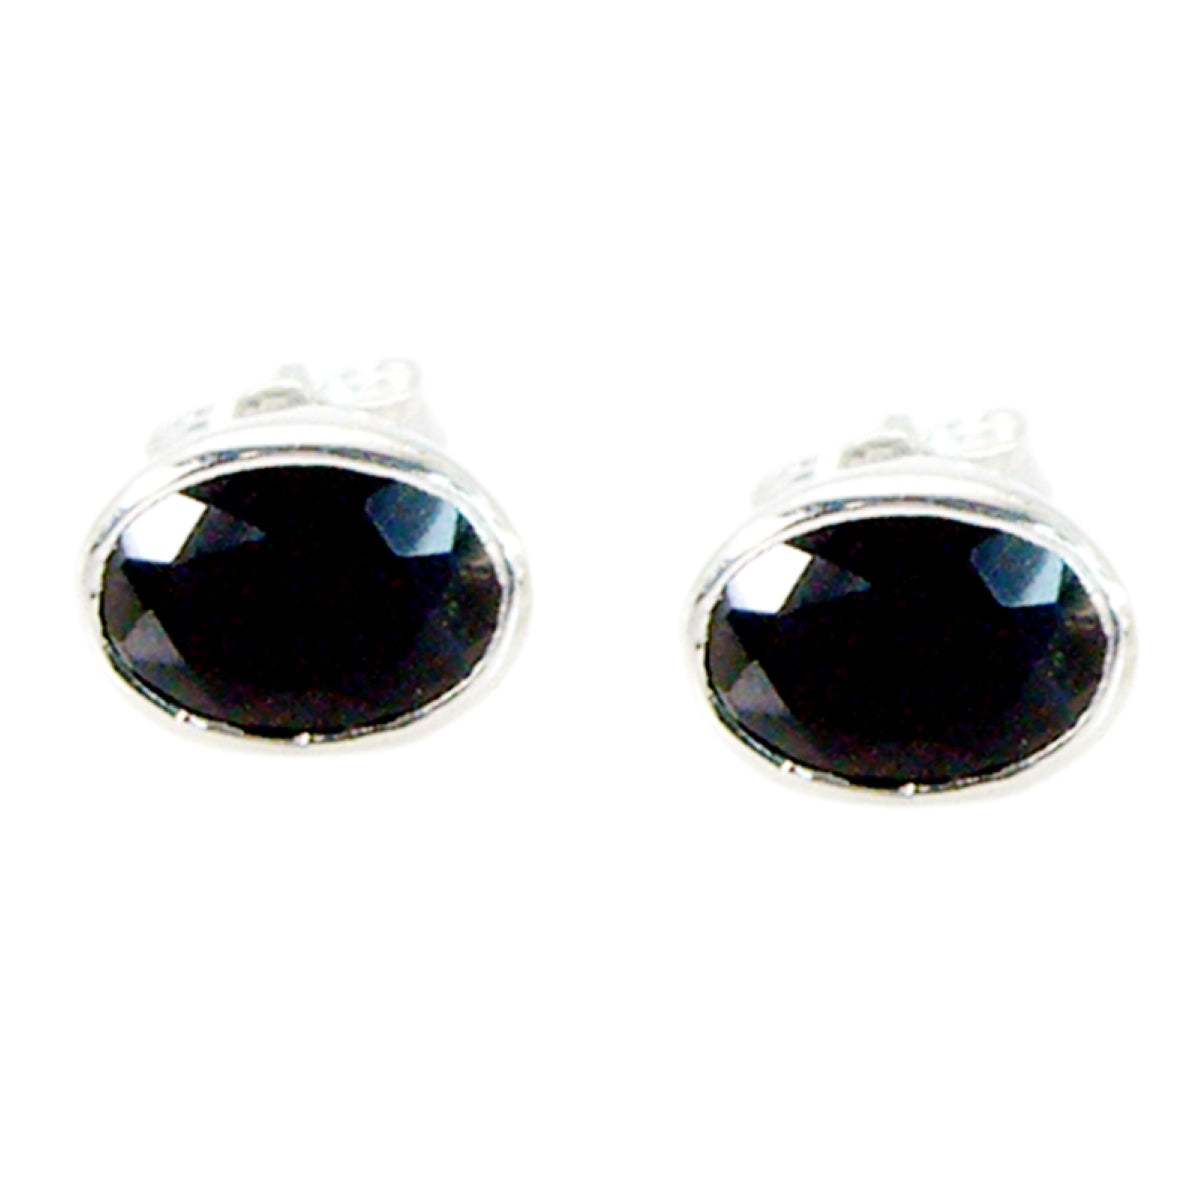 Riyo Good Gemstones oval Faceted Black Onyx Silver Earring wedding gift